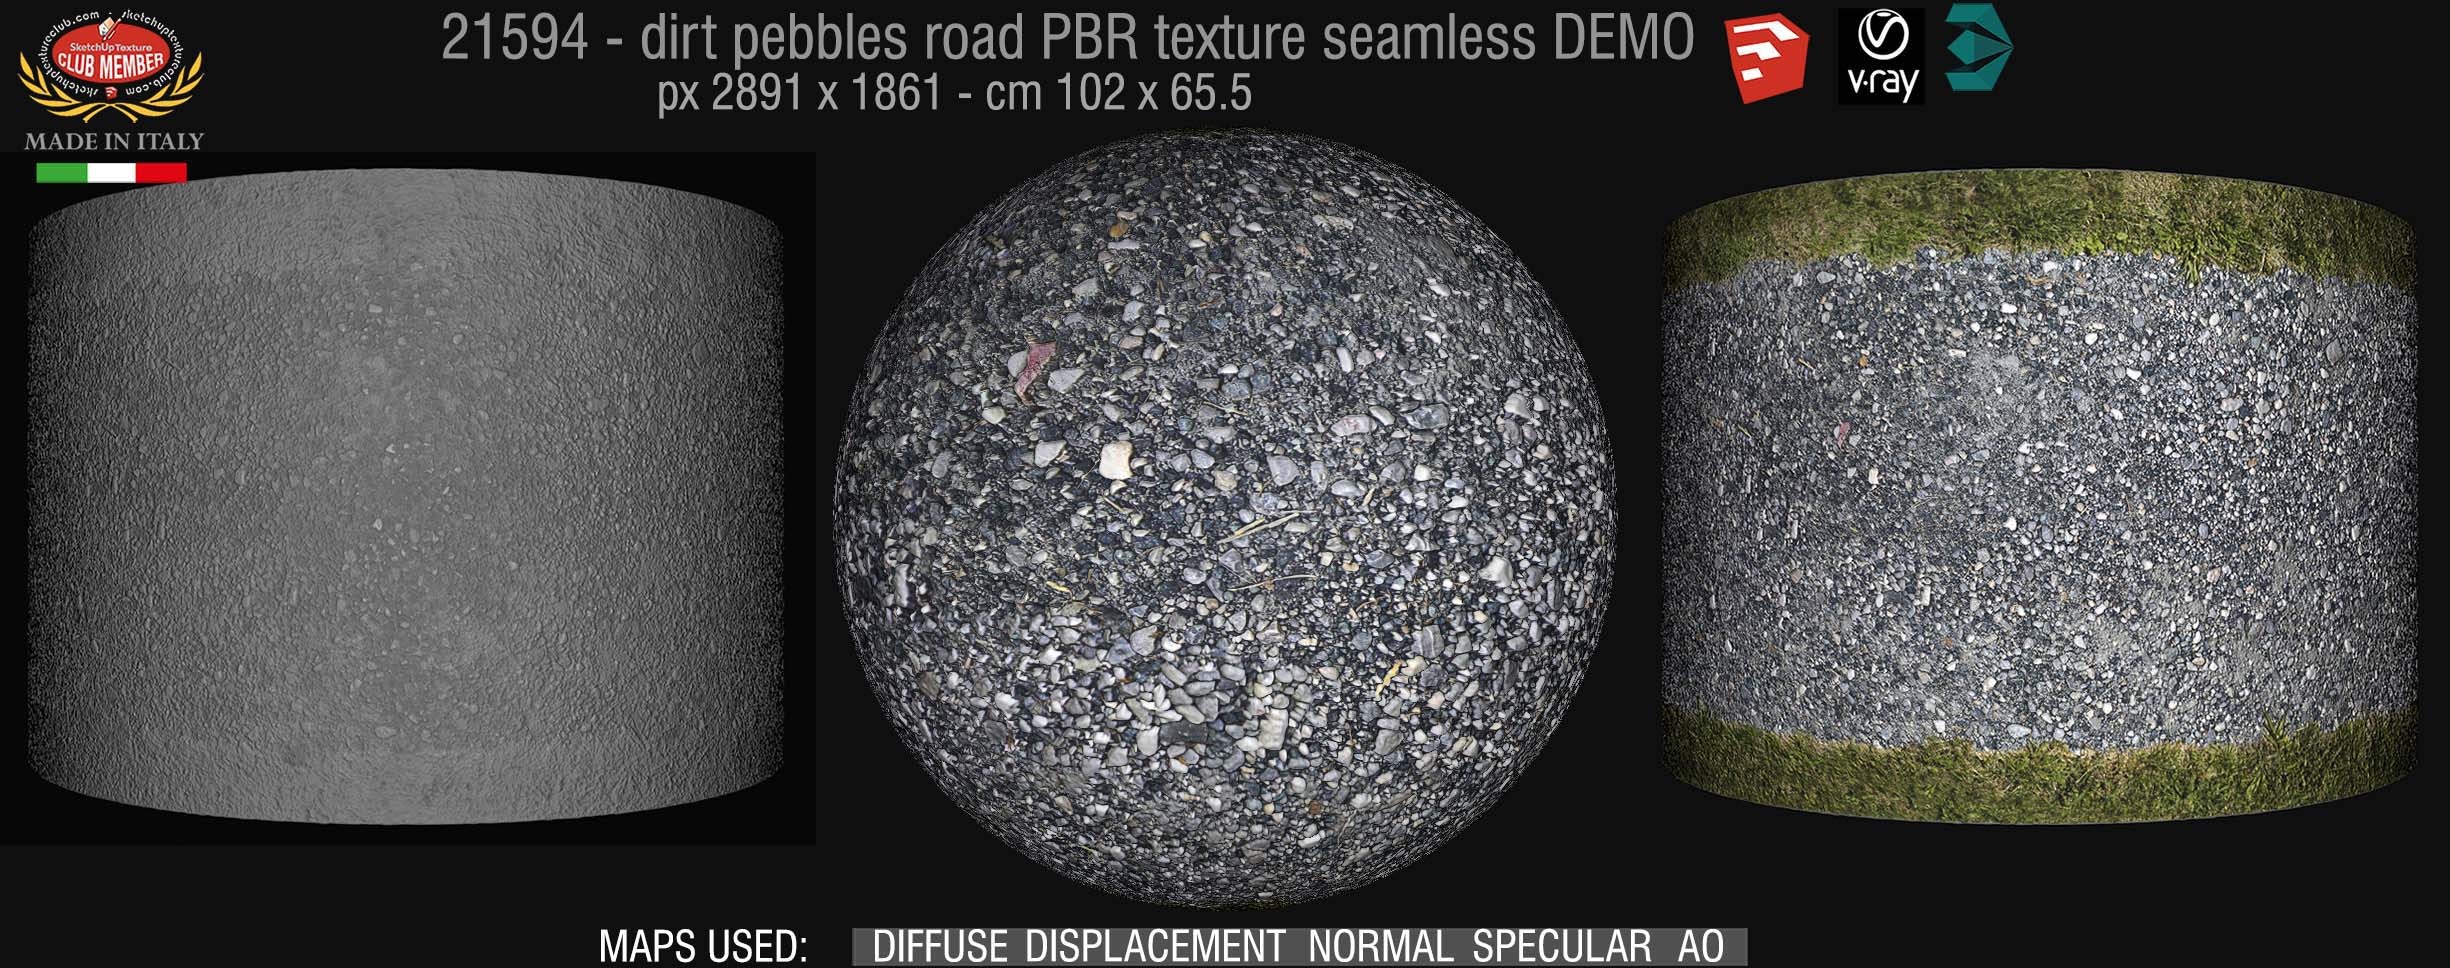 21594 dirt pebbles road PBR texture seamless DEMO